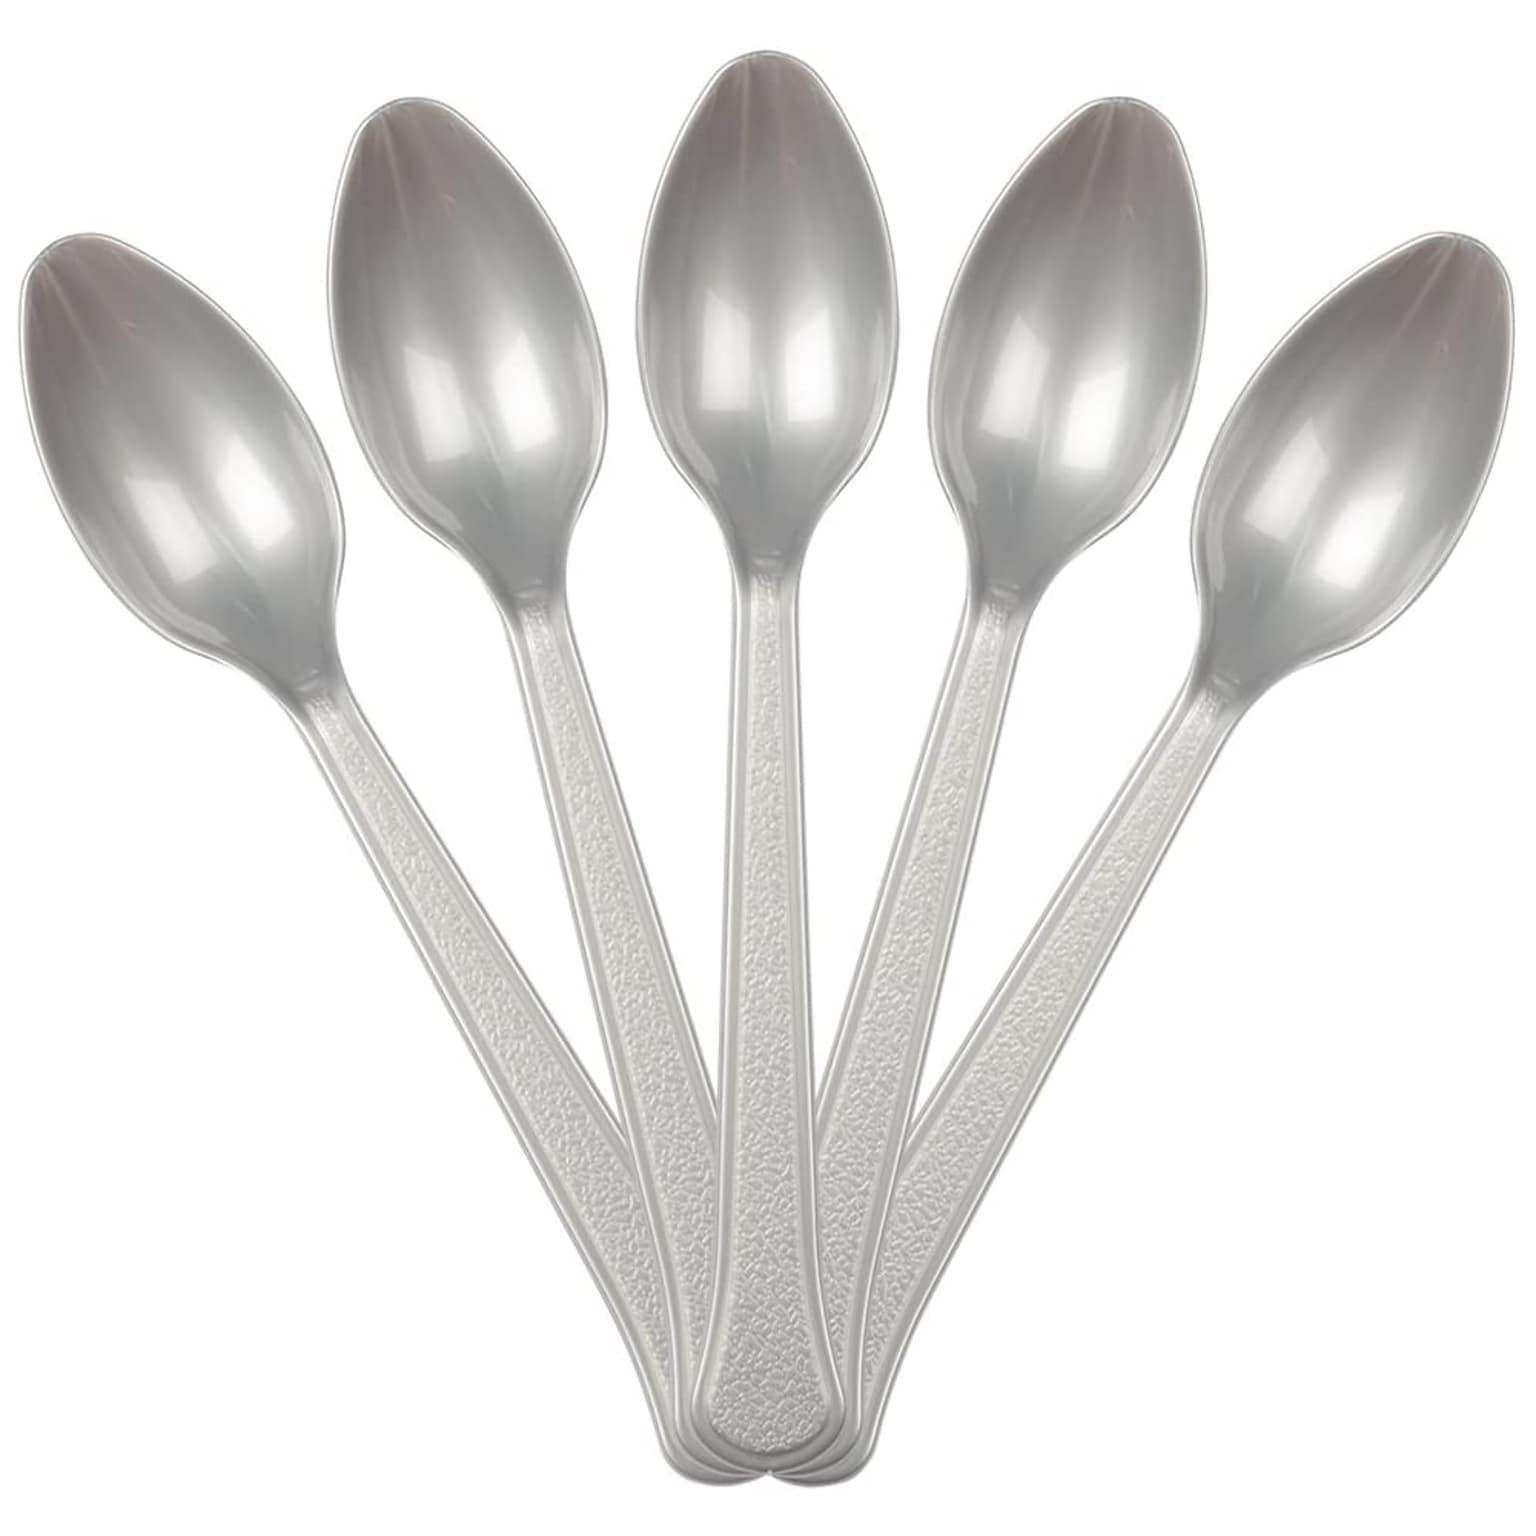 JAM PAPER Premium Utensils Party Pack, Plastic Spoons, Silver, 48 Disposable Spoons/Pack